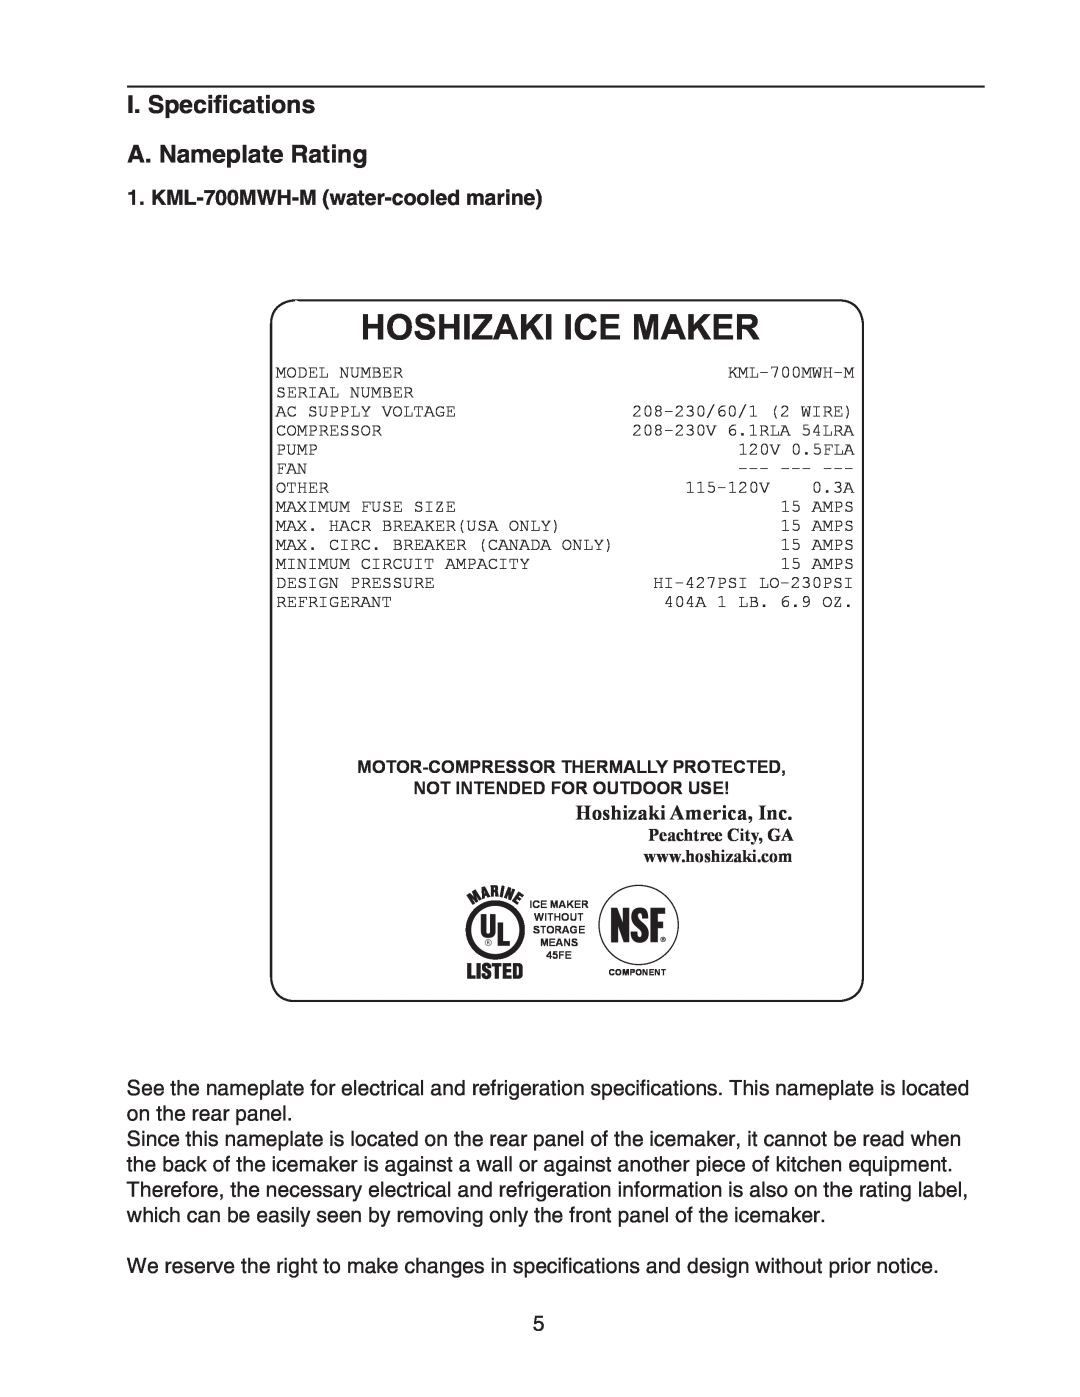 Hoshizaki instruction manual I. Specifications A. Nameplate Rating, KML-700MWH-M water-cooledmarine, Hoshizaki Ice Maker 